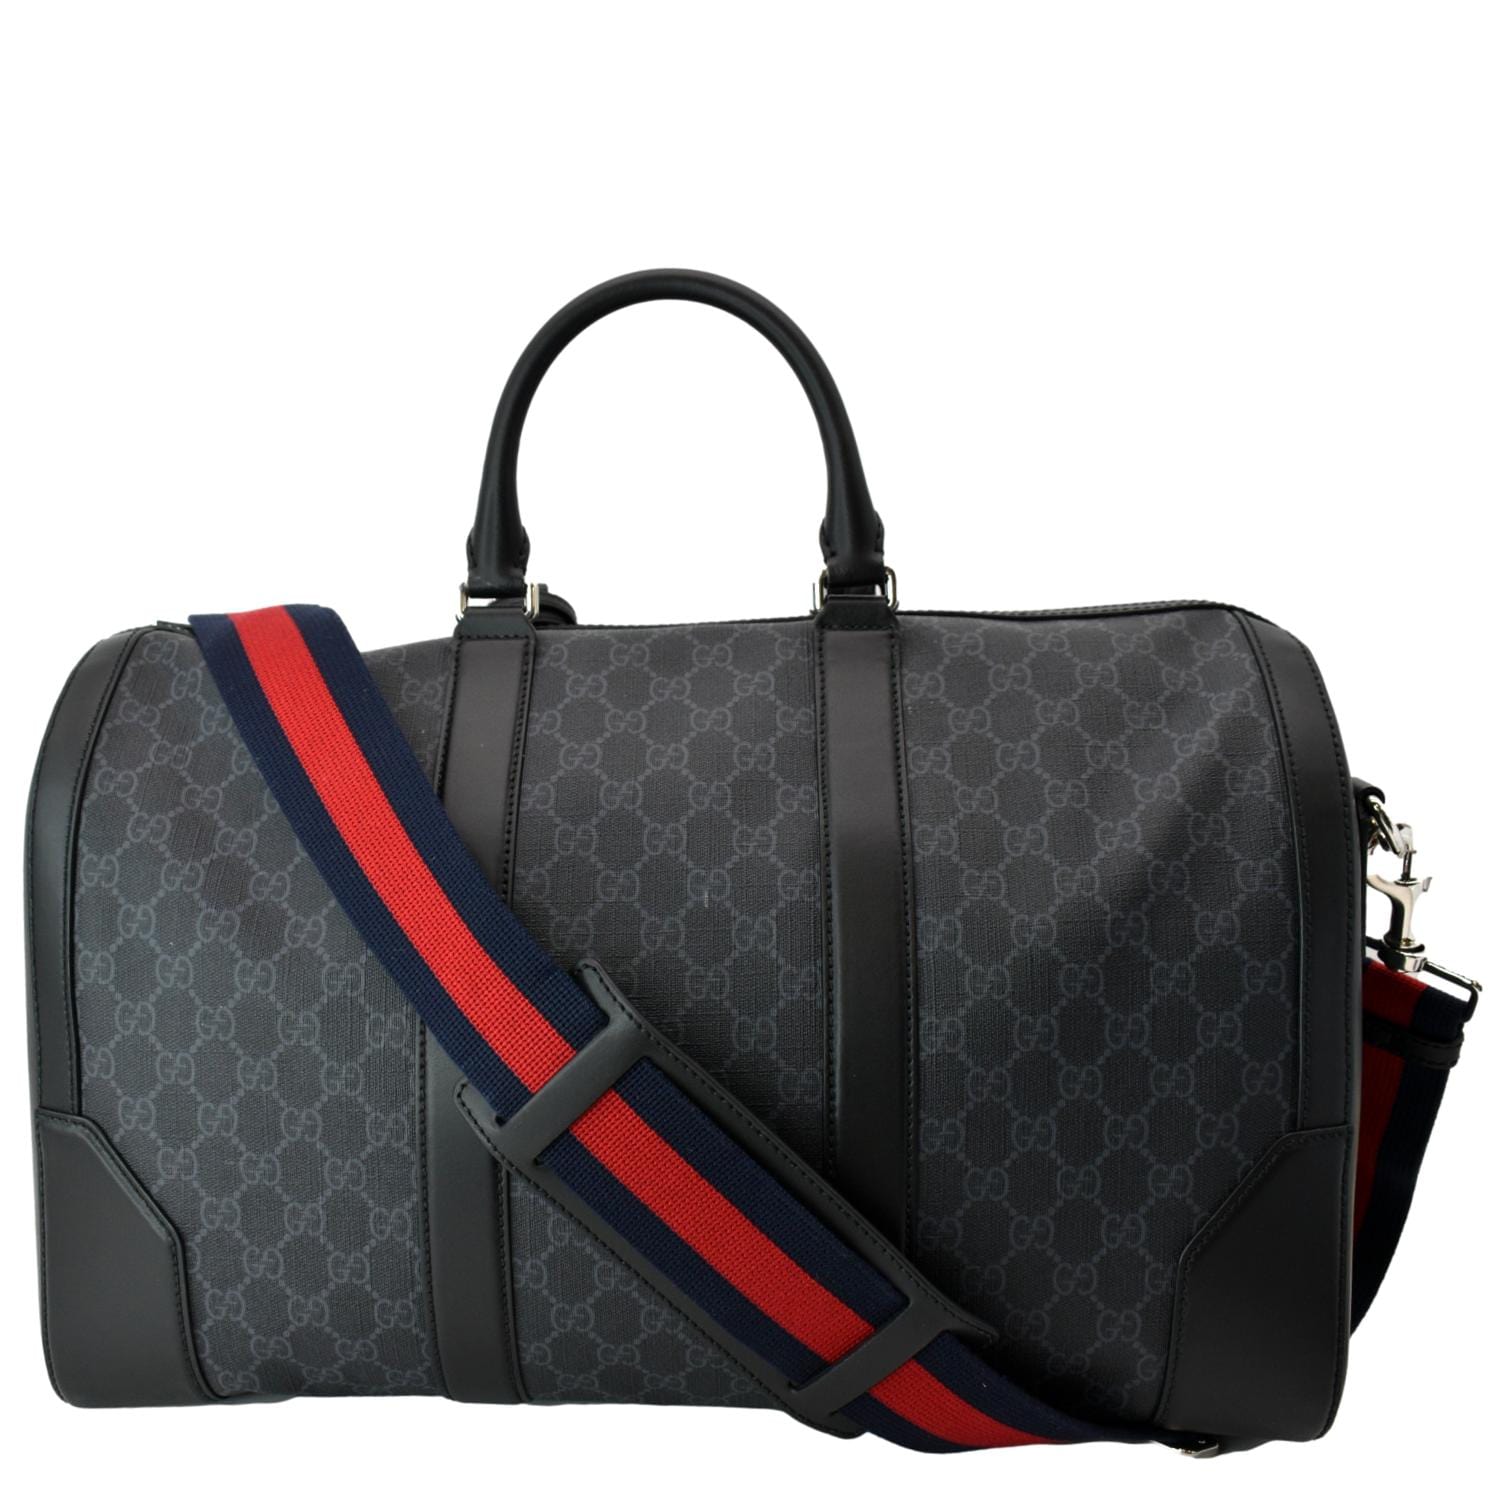 Sold at Auction: Gucci Accessory Collection GG Supreme Web Boston Bag